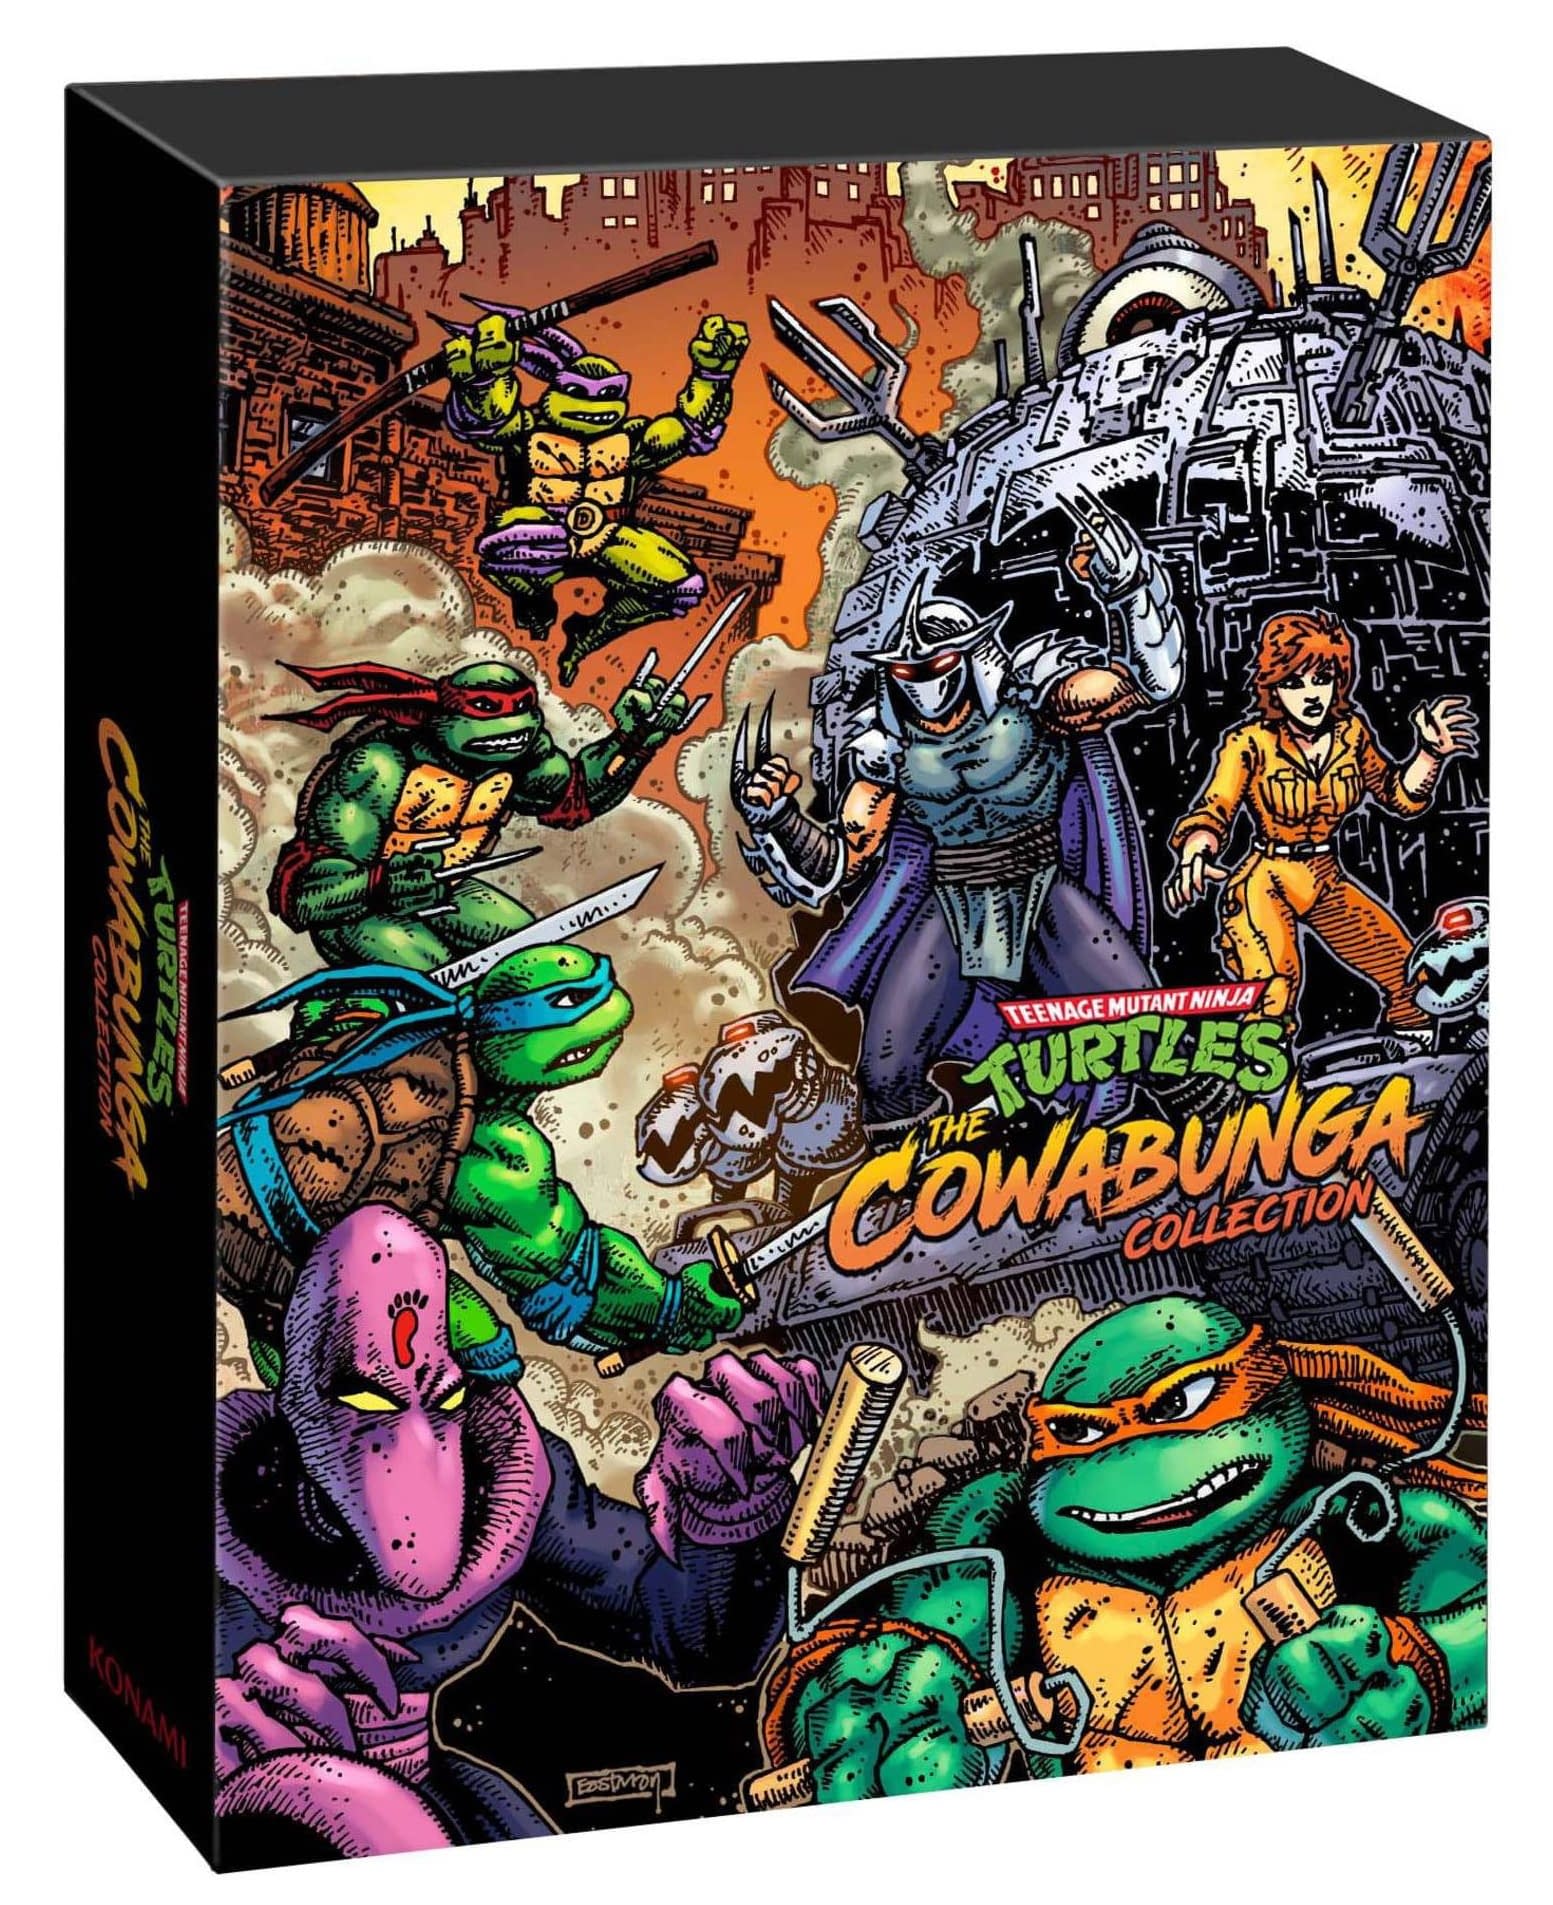 TMNT Cowabunga collection. TMNT Cowabunga collection ps4. Черепашки ниндзя на Нинтендо свитч. Teenage Mutant Ninja Turtles: the Cowabunga collection обложка.